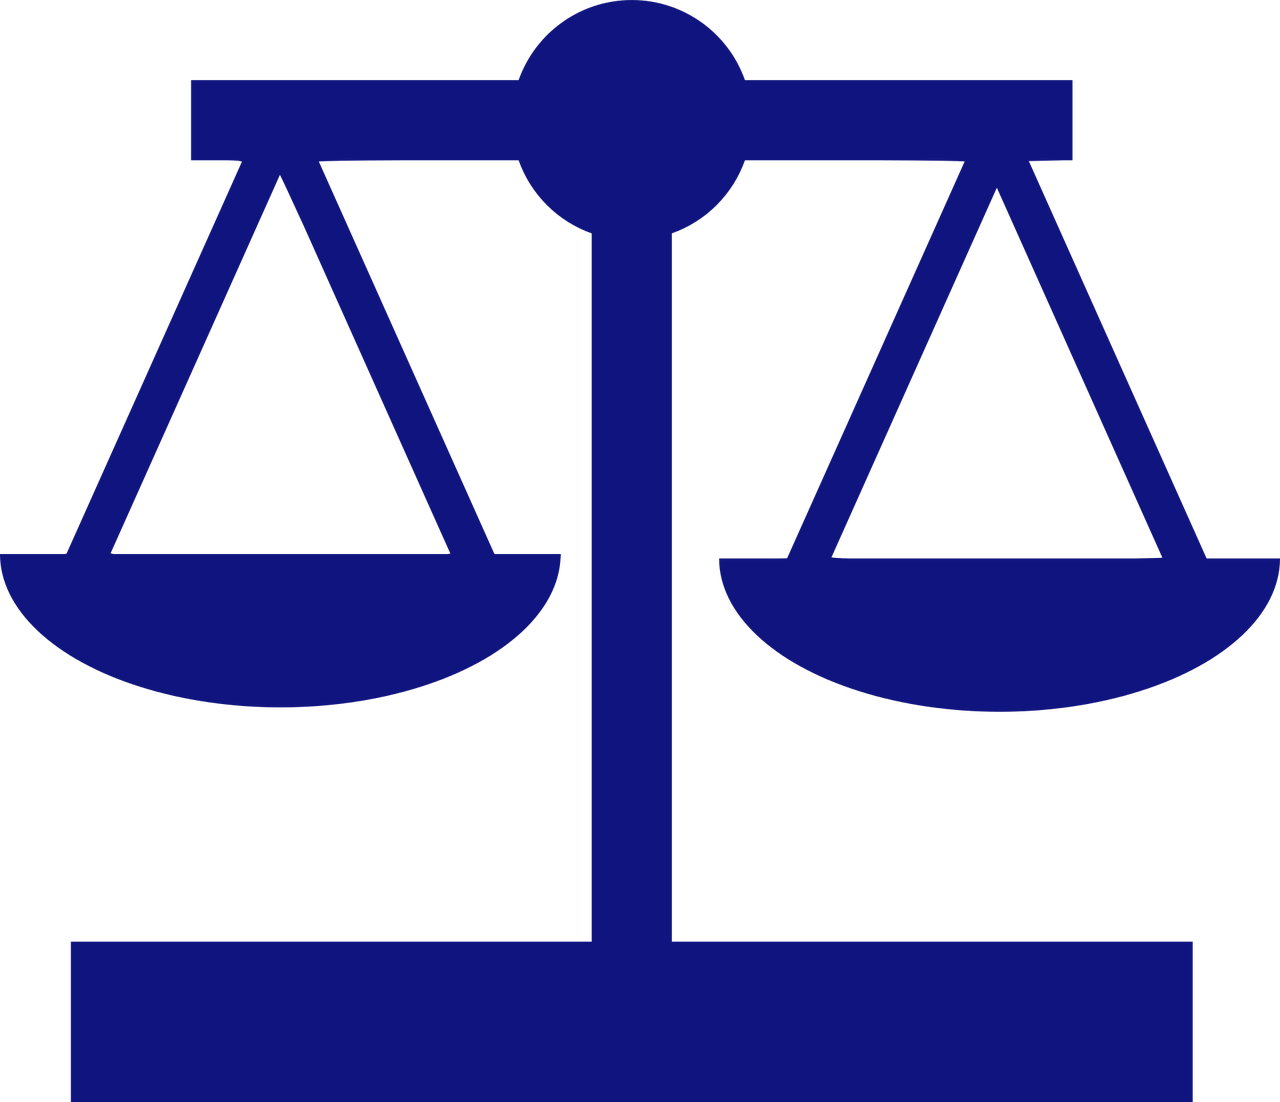 Blue scale icon